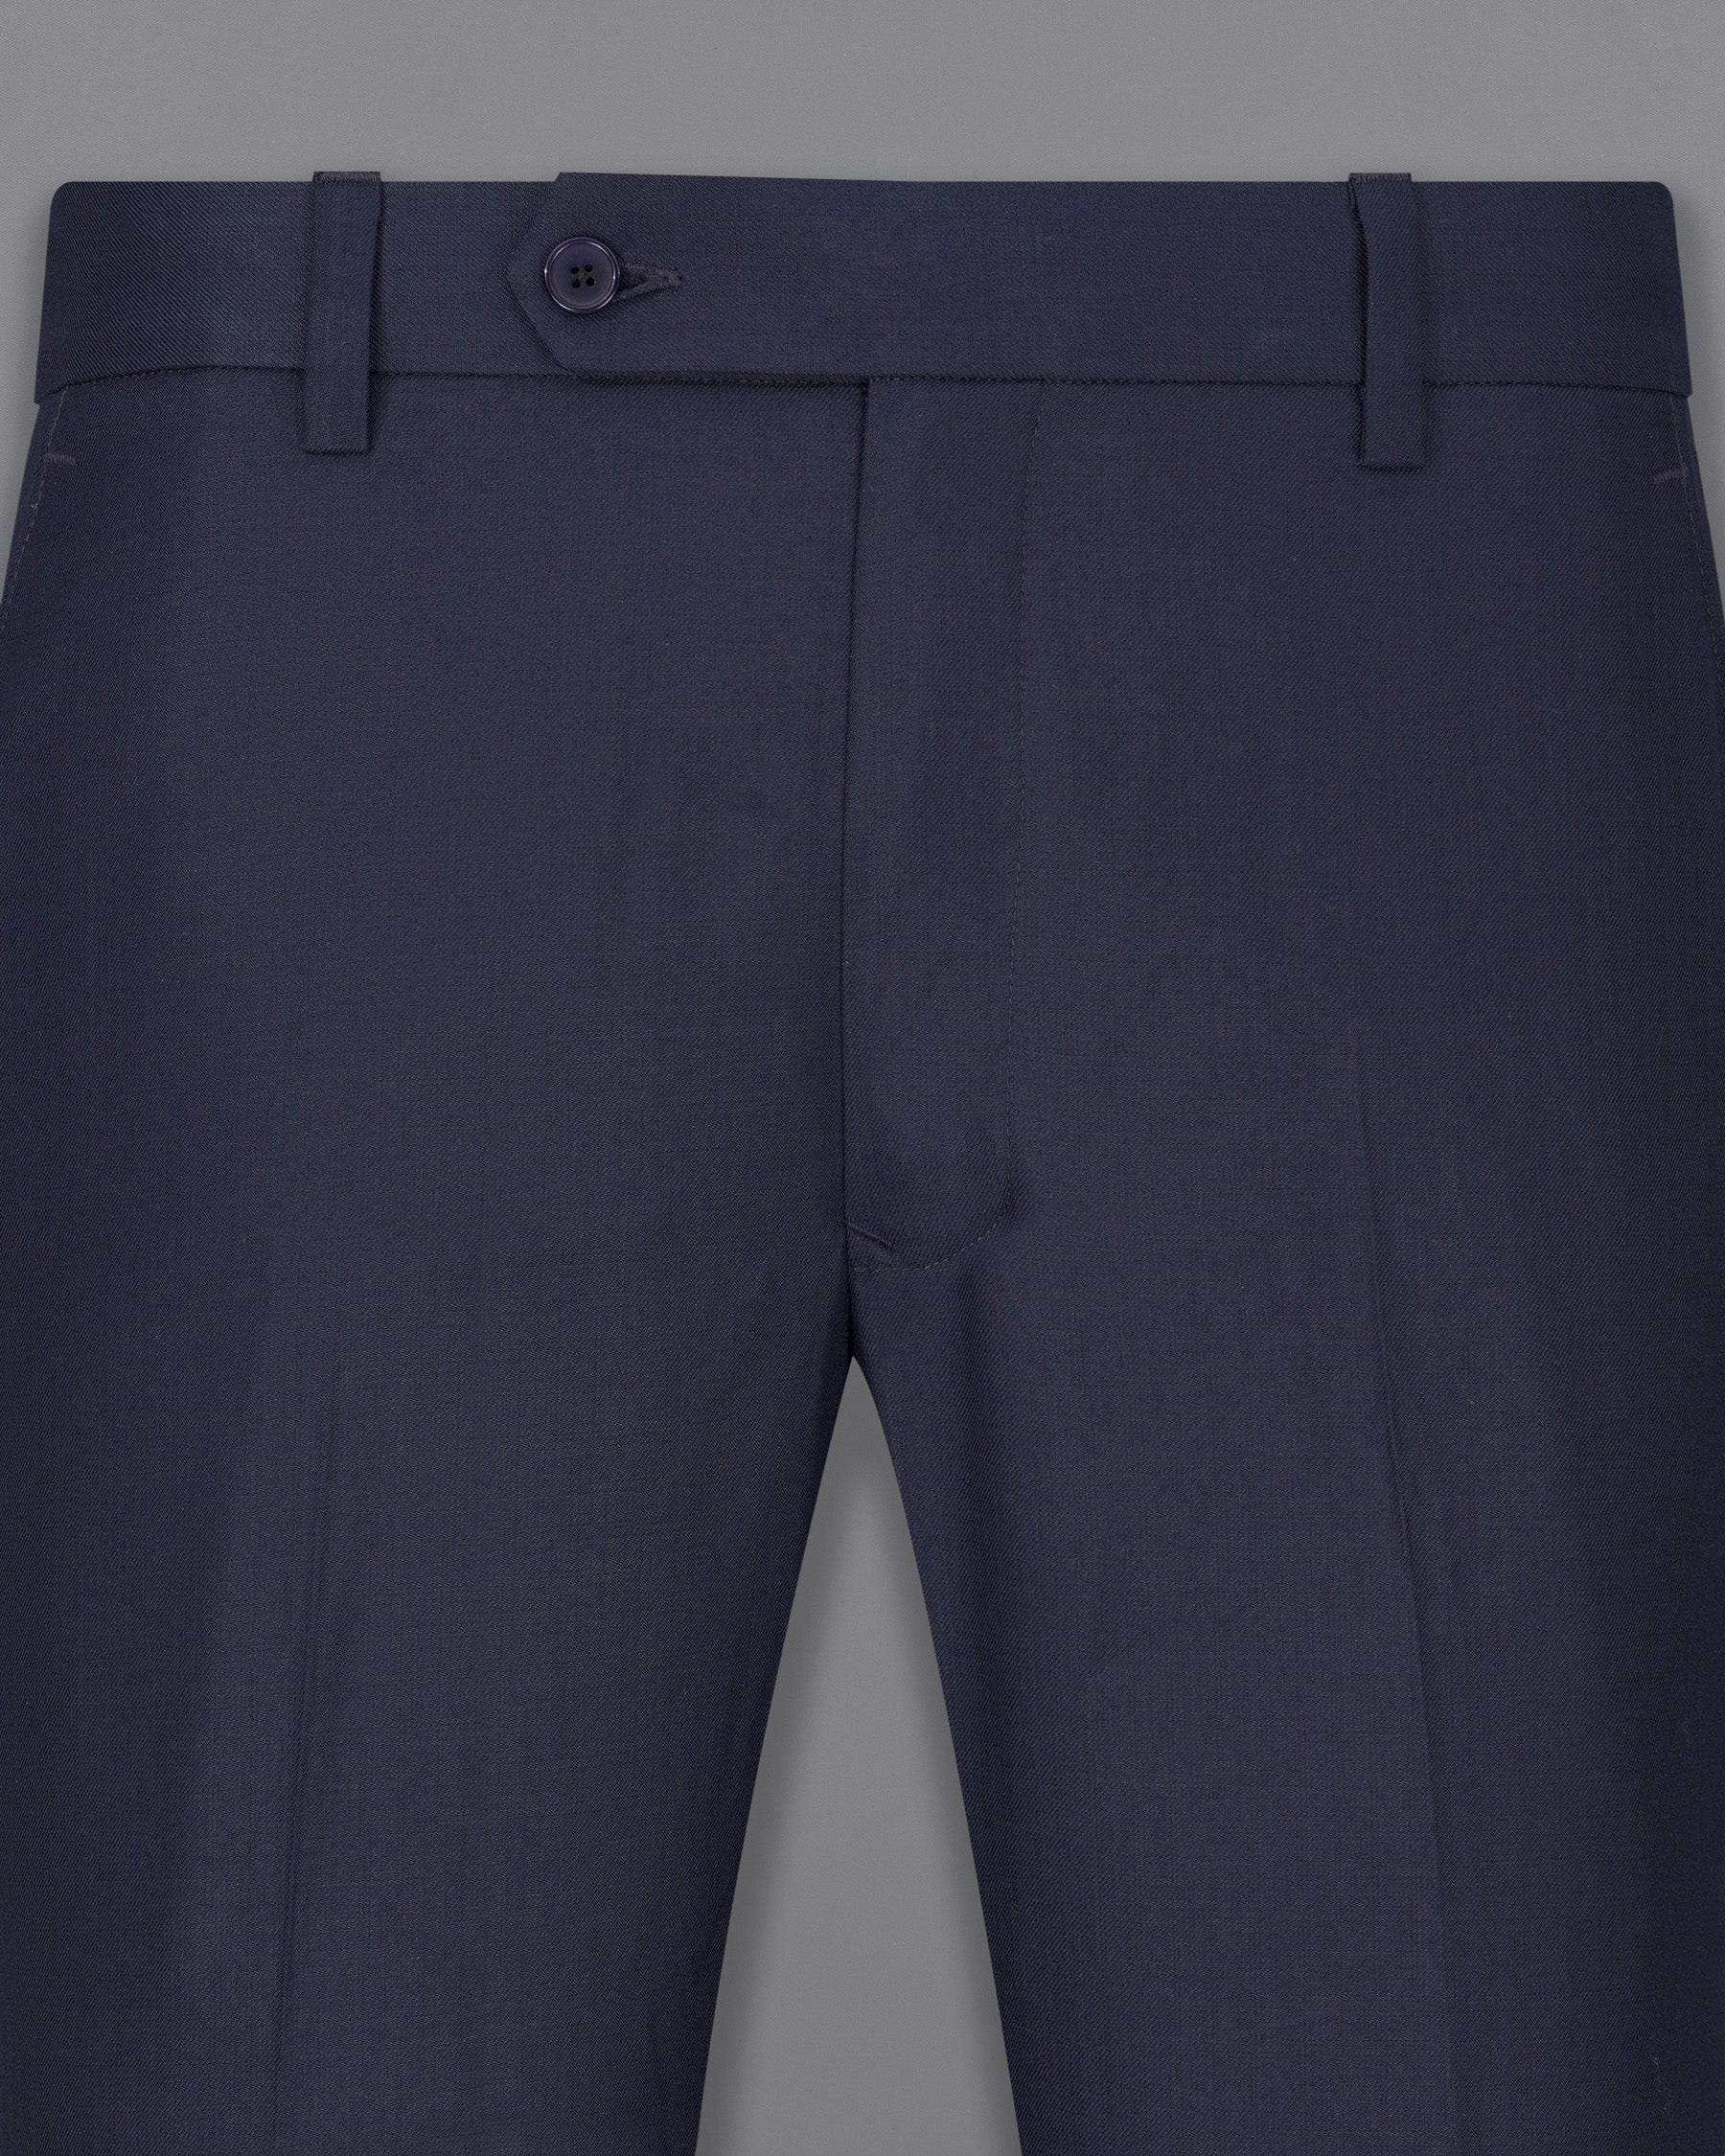 Formal Trouser: Check Men Navy Blue Cotton Formal Trouser at Cliths